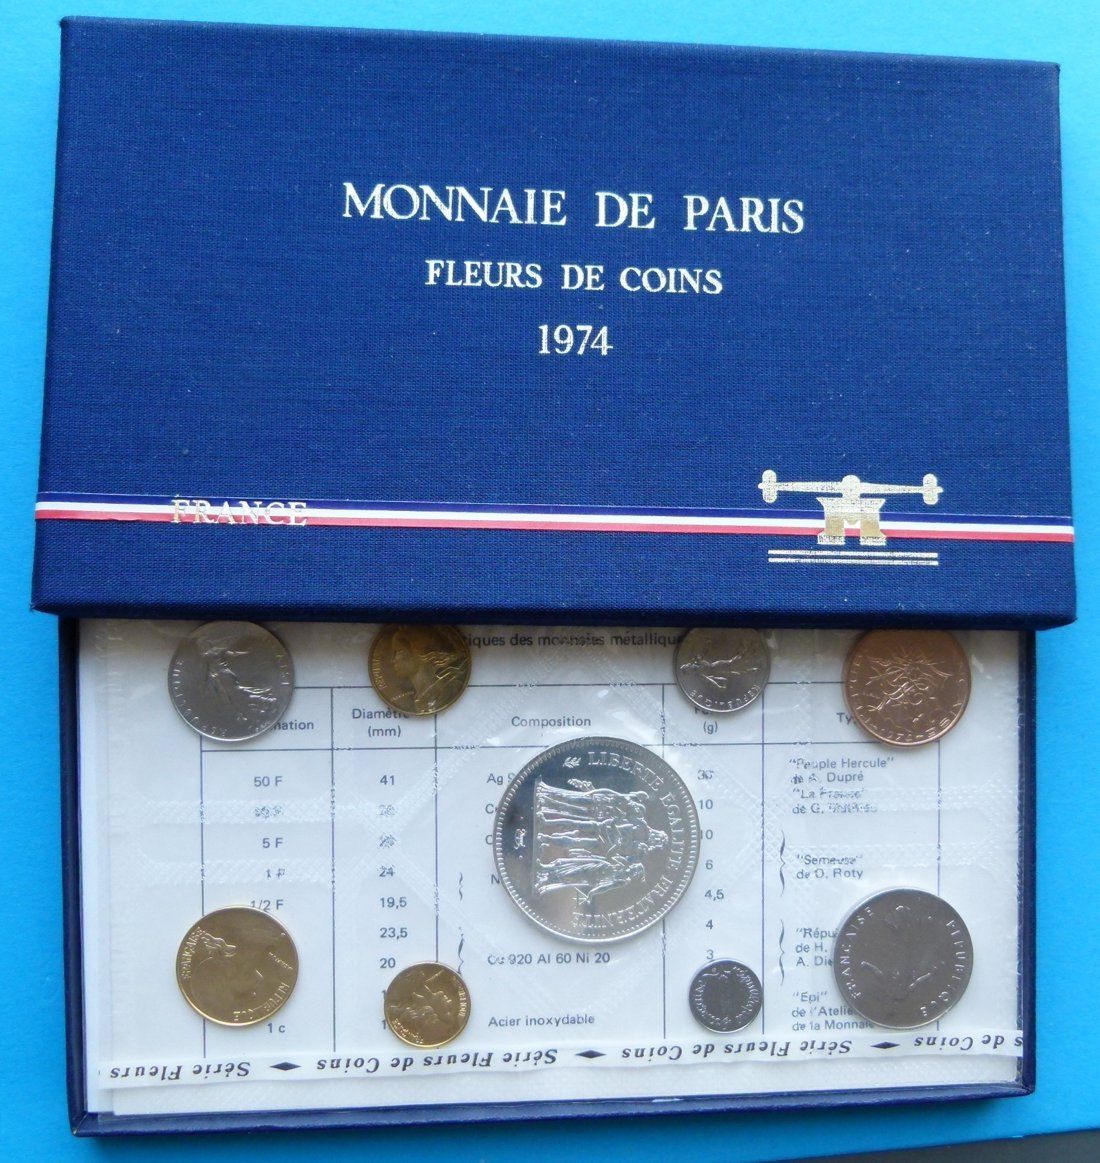 Hot coin цена. Франция набор монет 1974 fleurs de Coins-1974. Монетный двор Париж. Парижские монеты в 2010. Монета федеральных служб.